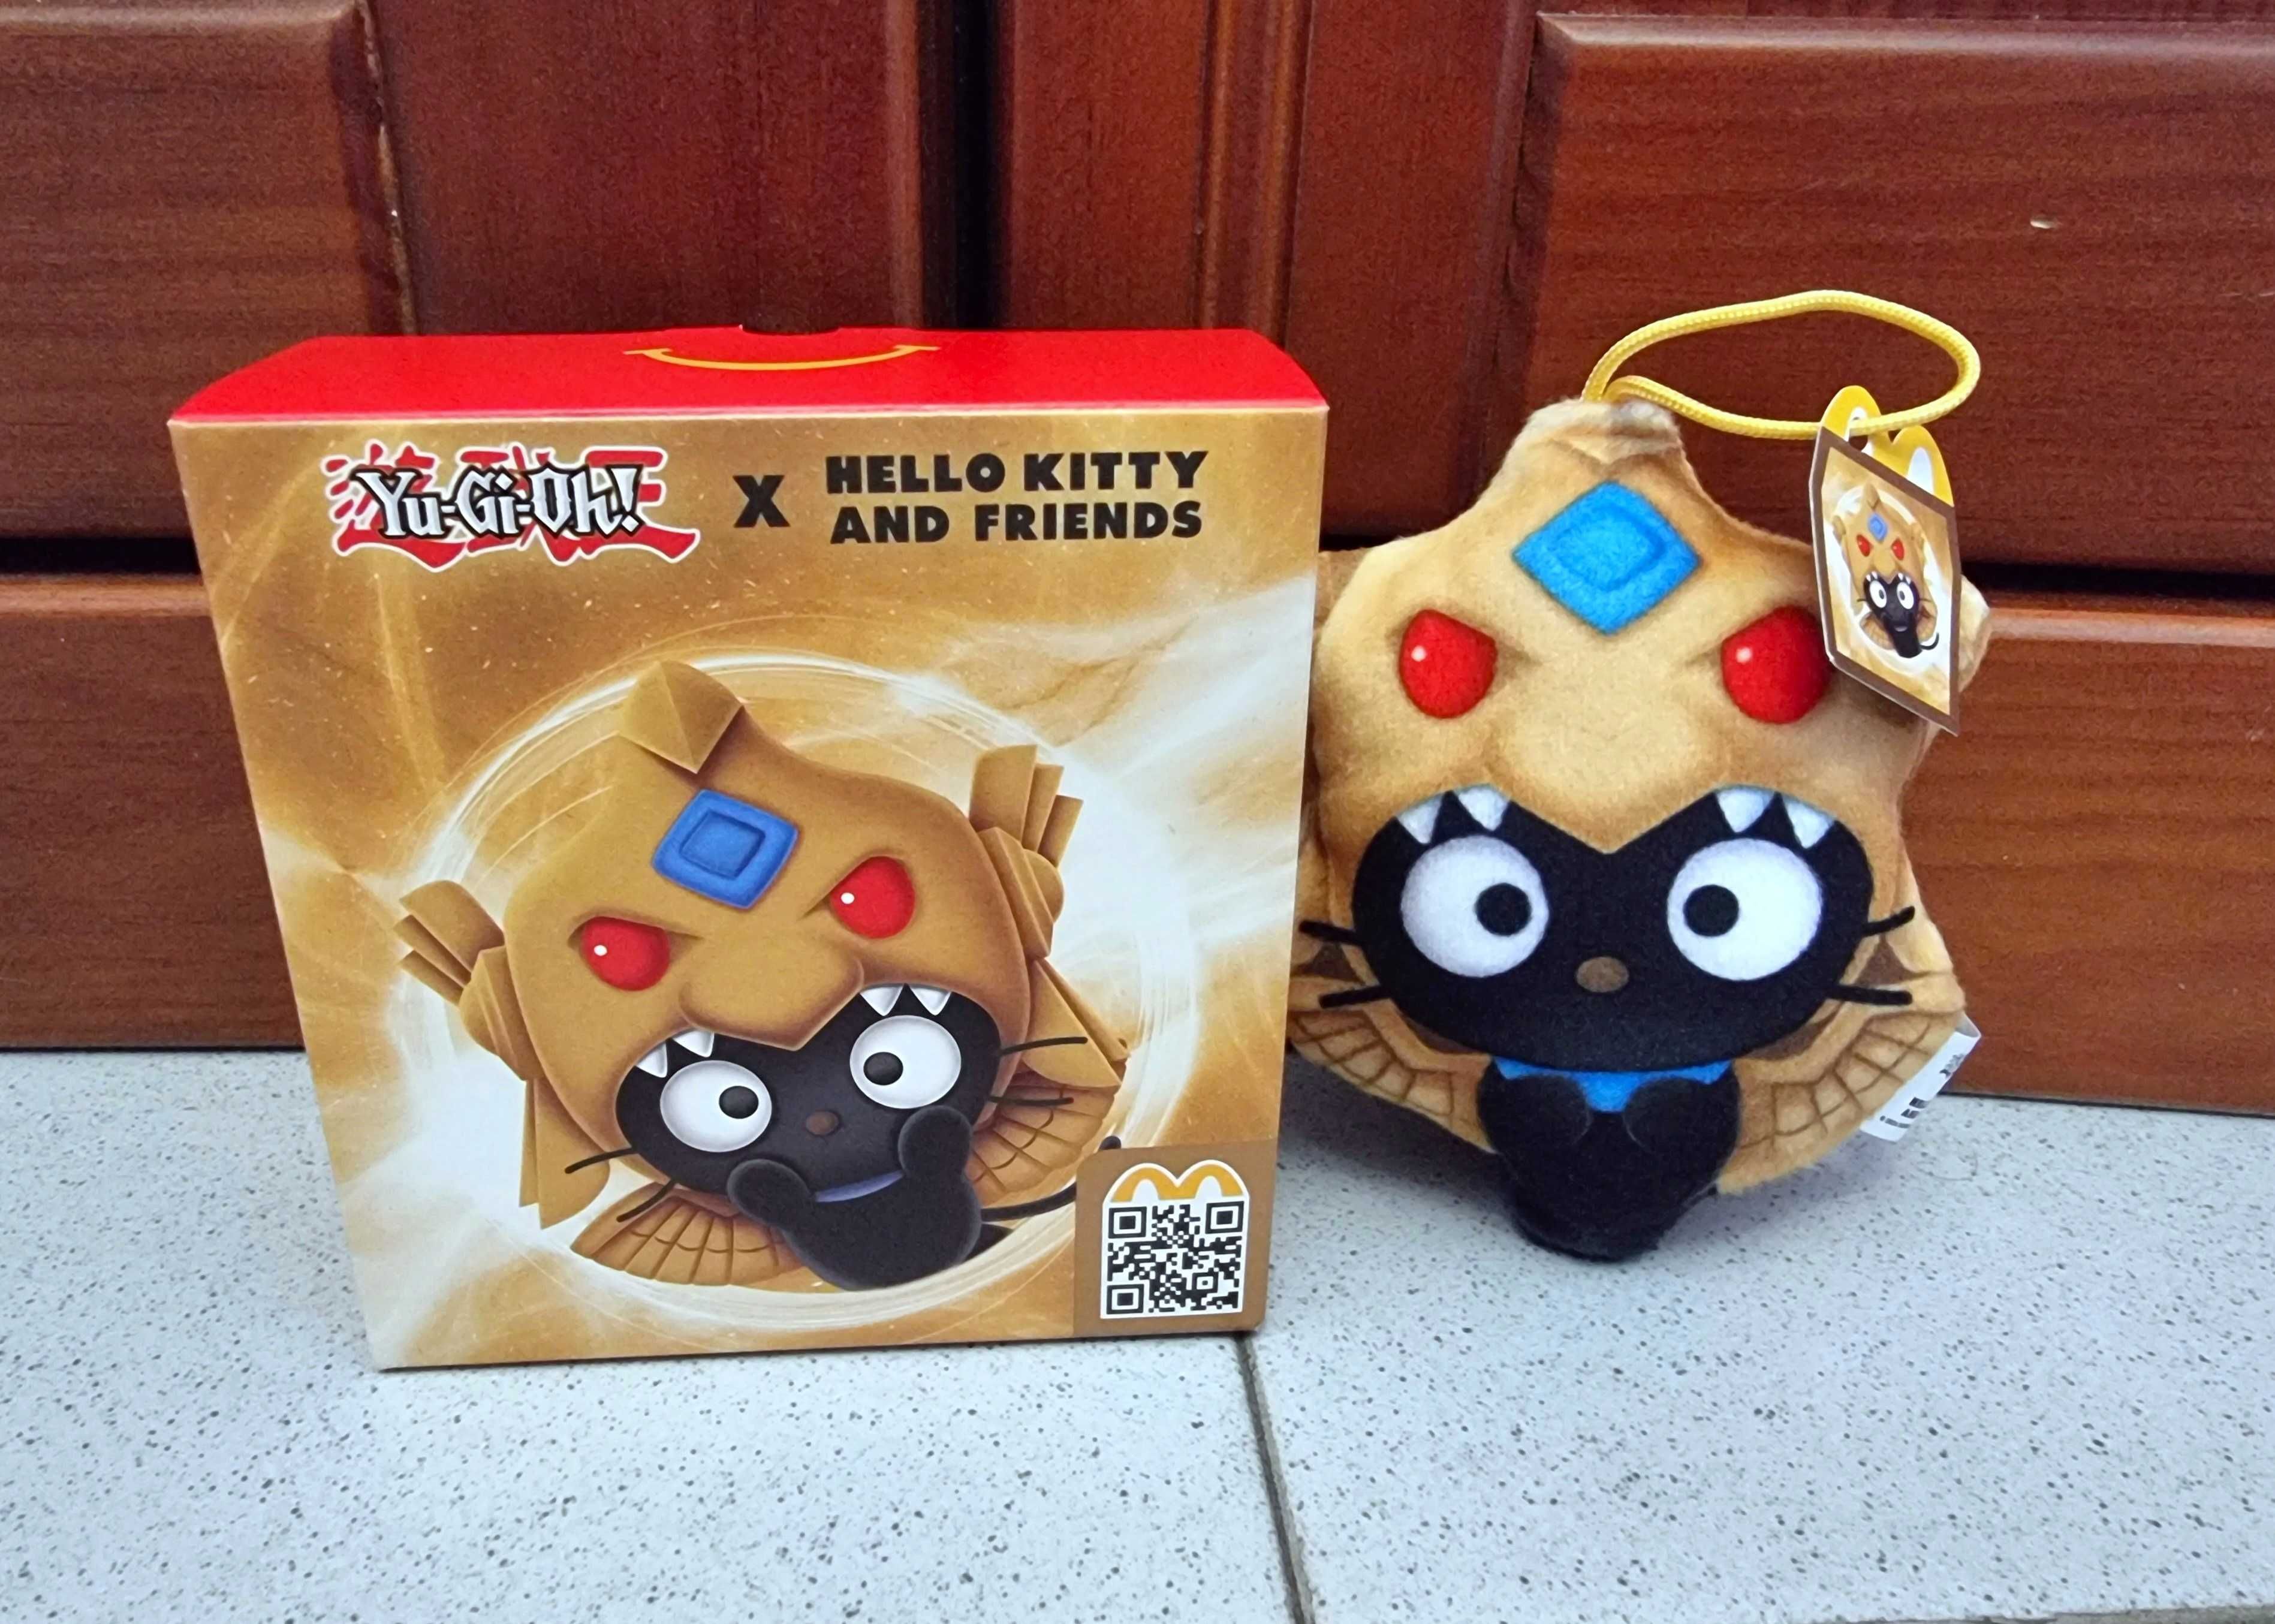 6 Brinquedos Yu-Gi-Oh! x Hello Kitty and Friends